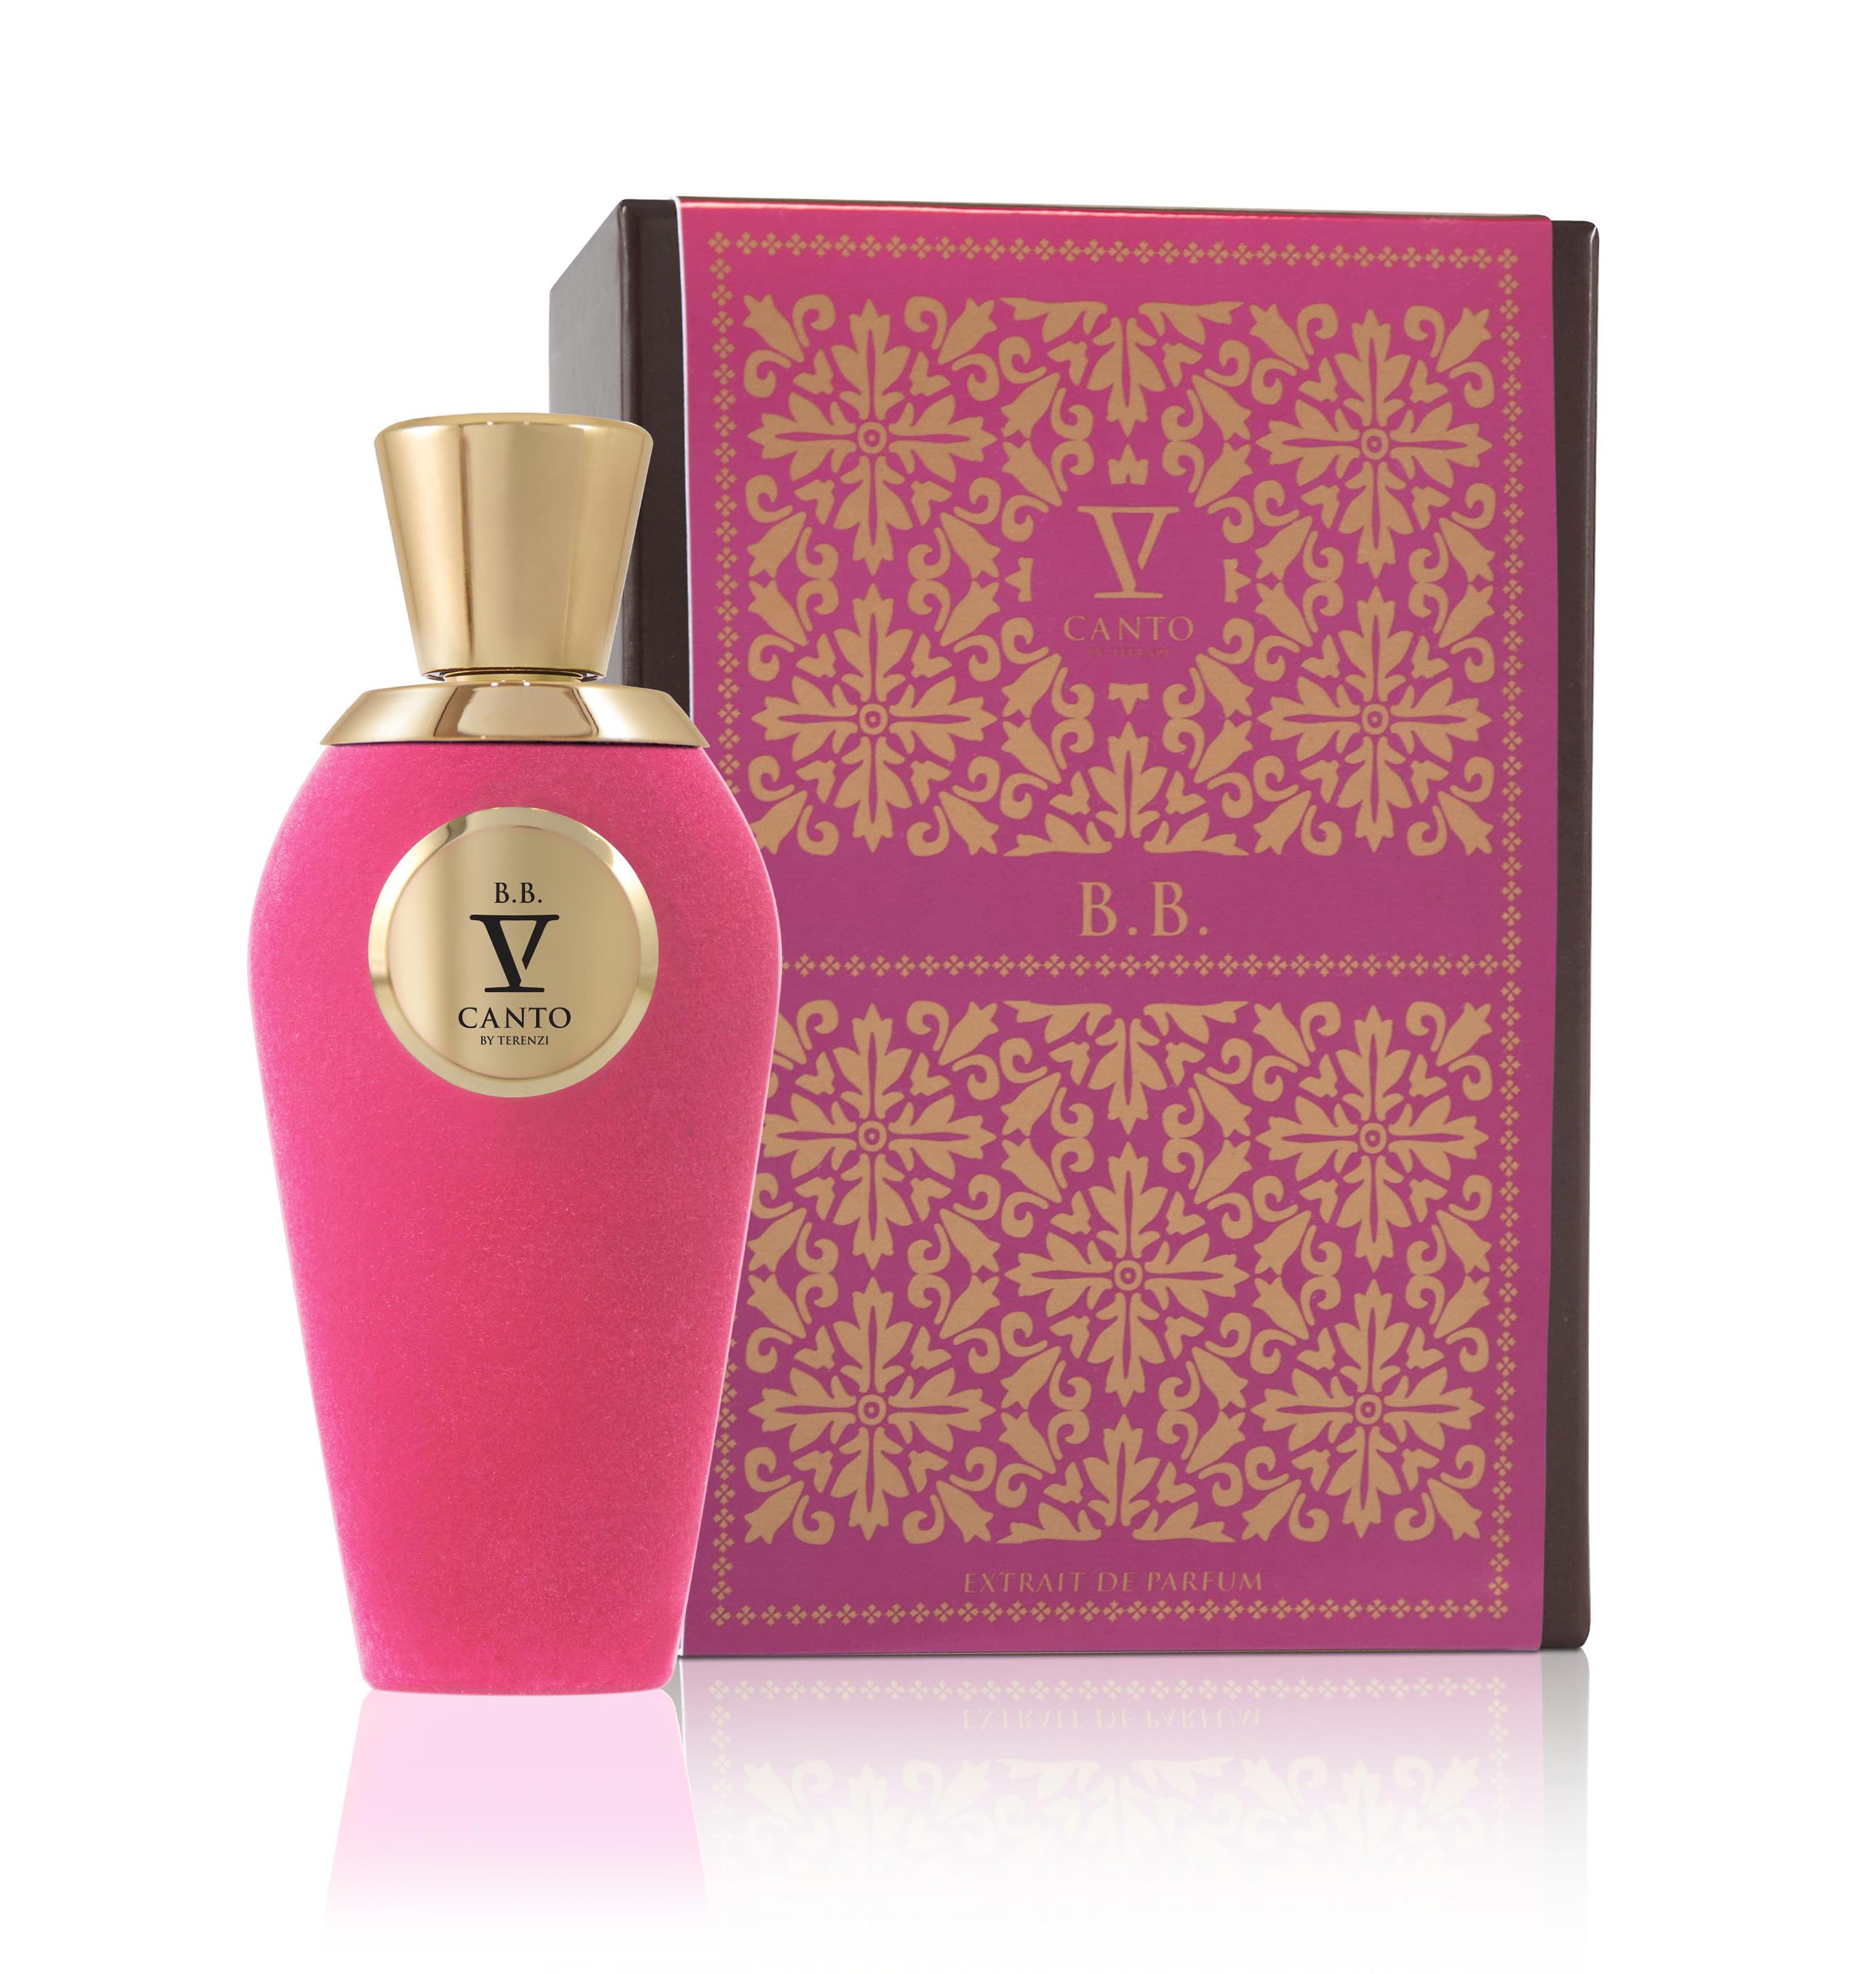 V Canto B.b. Extrait De Parfum In Pink / White